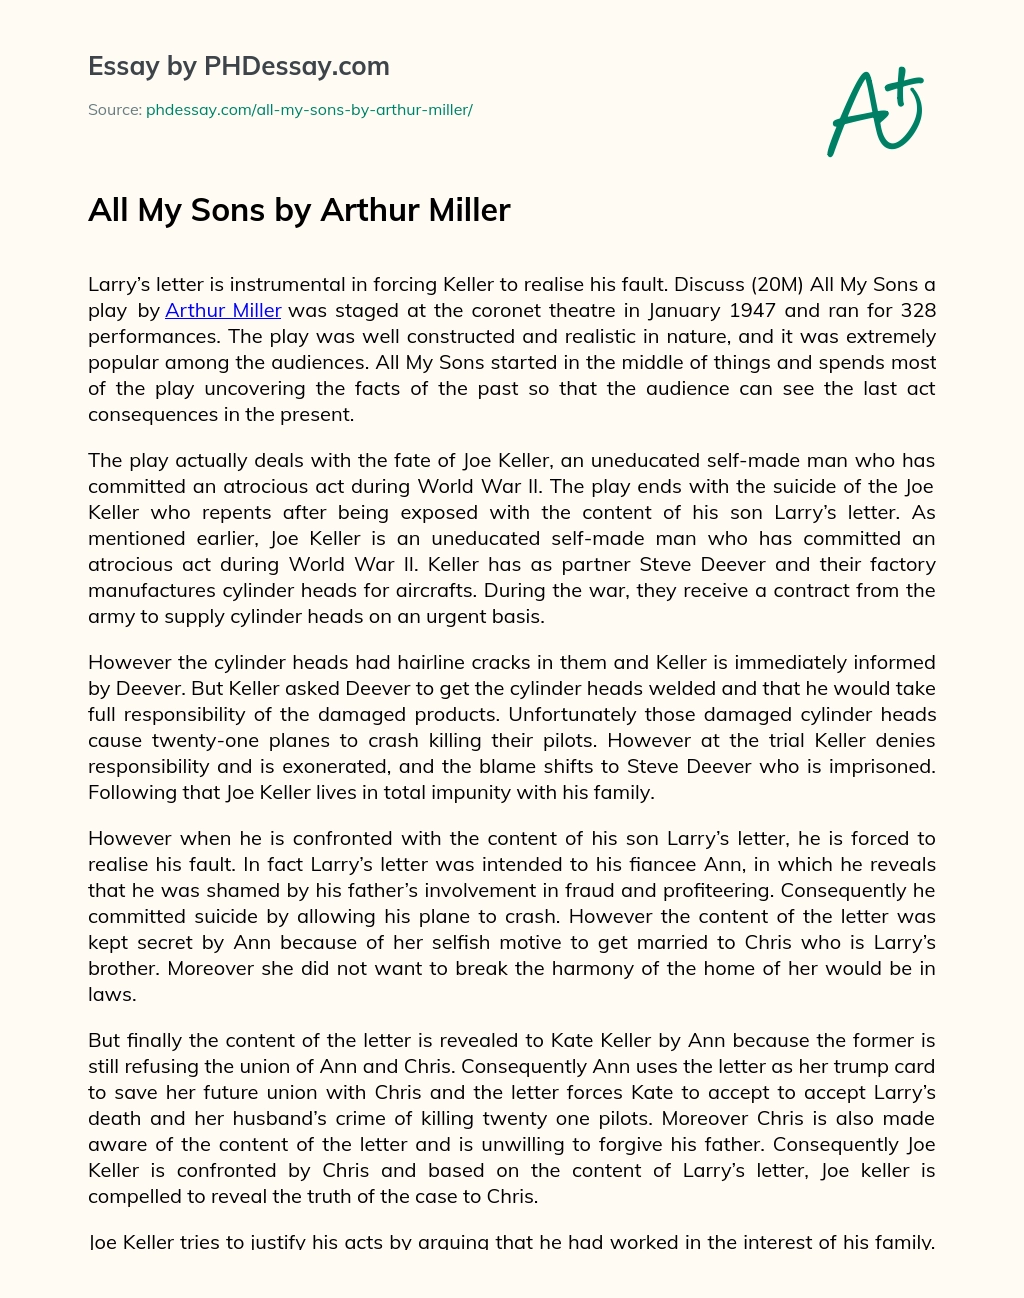 All My Sons by Arthur Miller essay